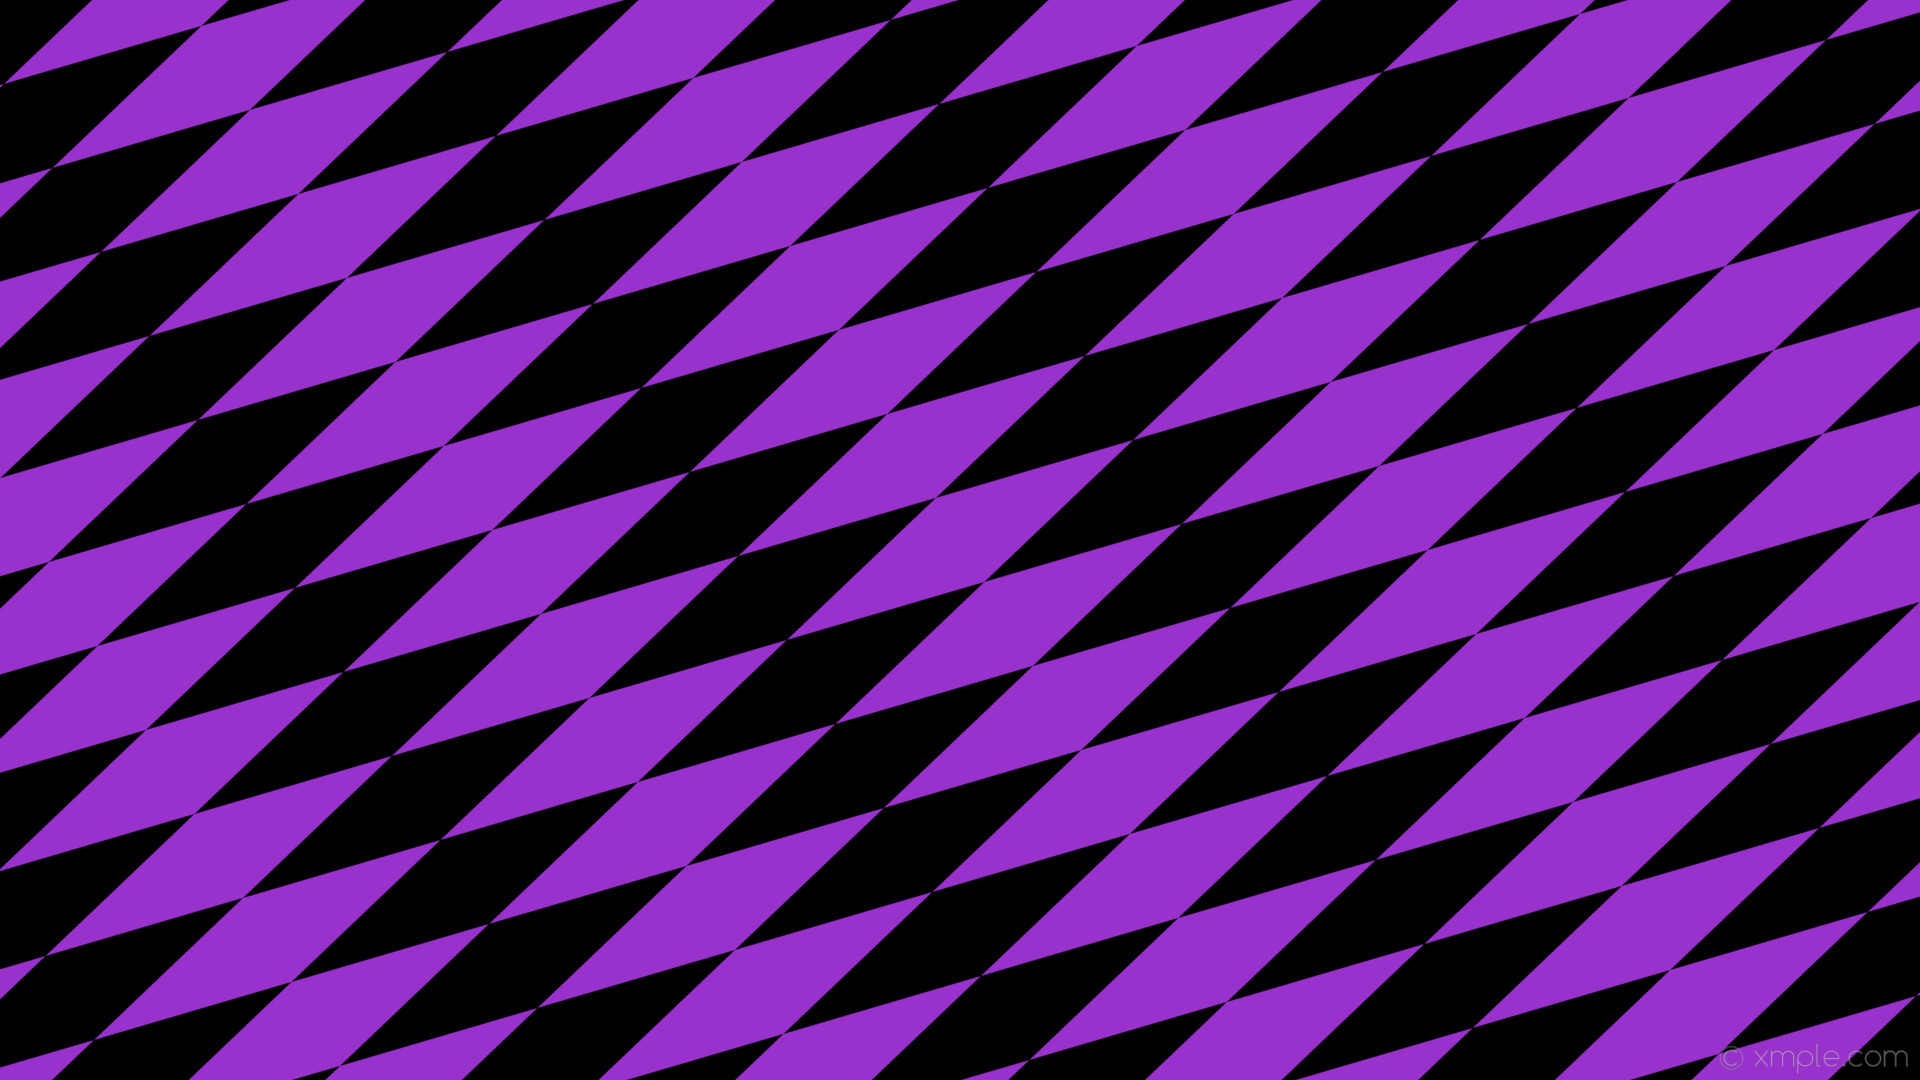 1920x1080 wallpaper purple rhombus lozenge black diamond dark orchid #9932cc #000000  30Â° 400px 97px